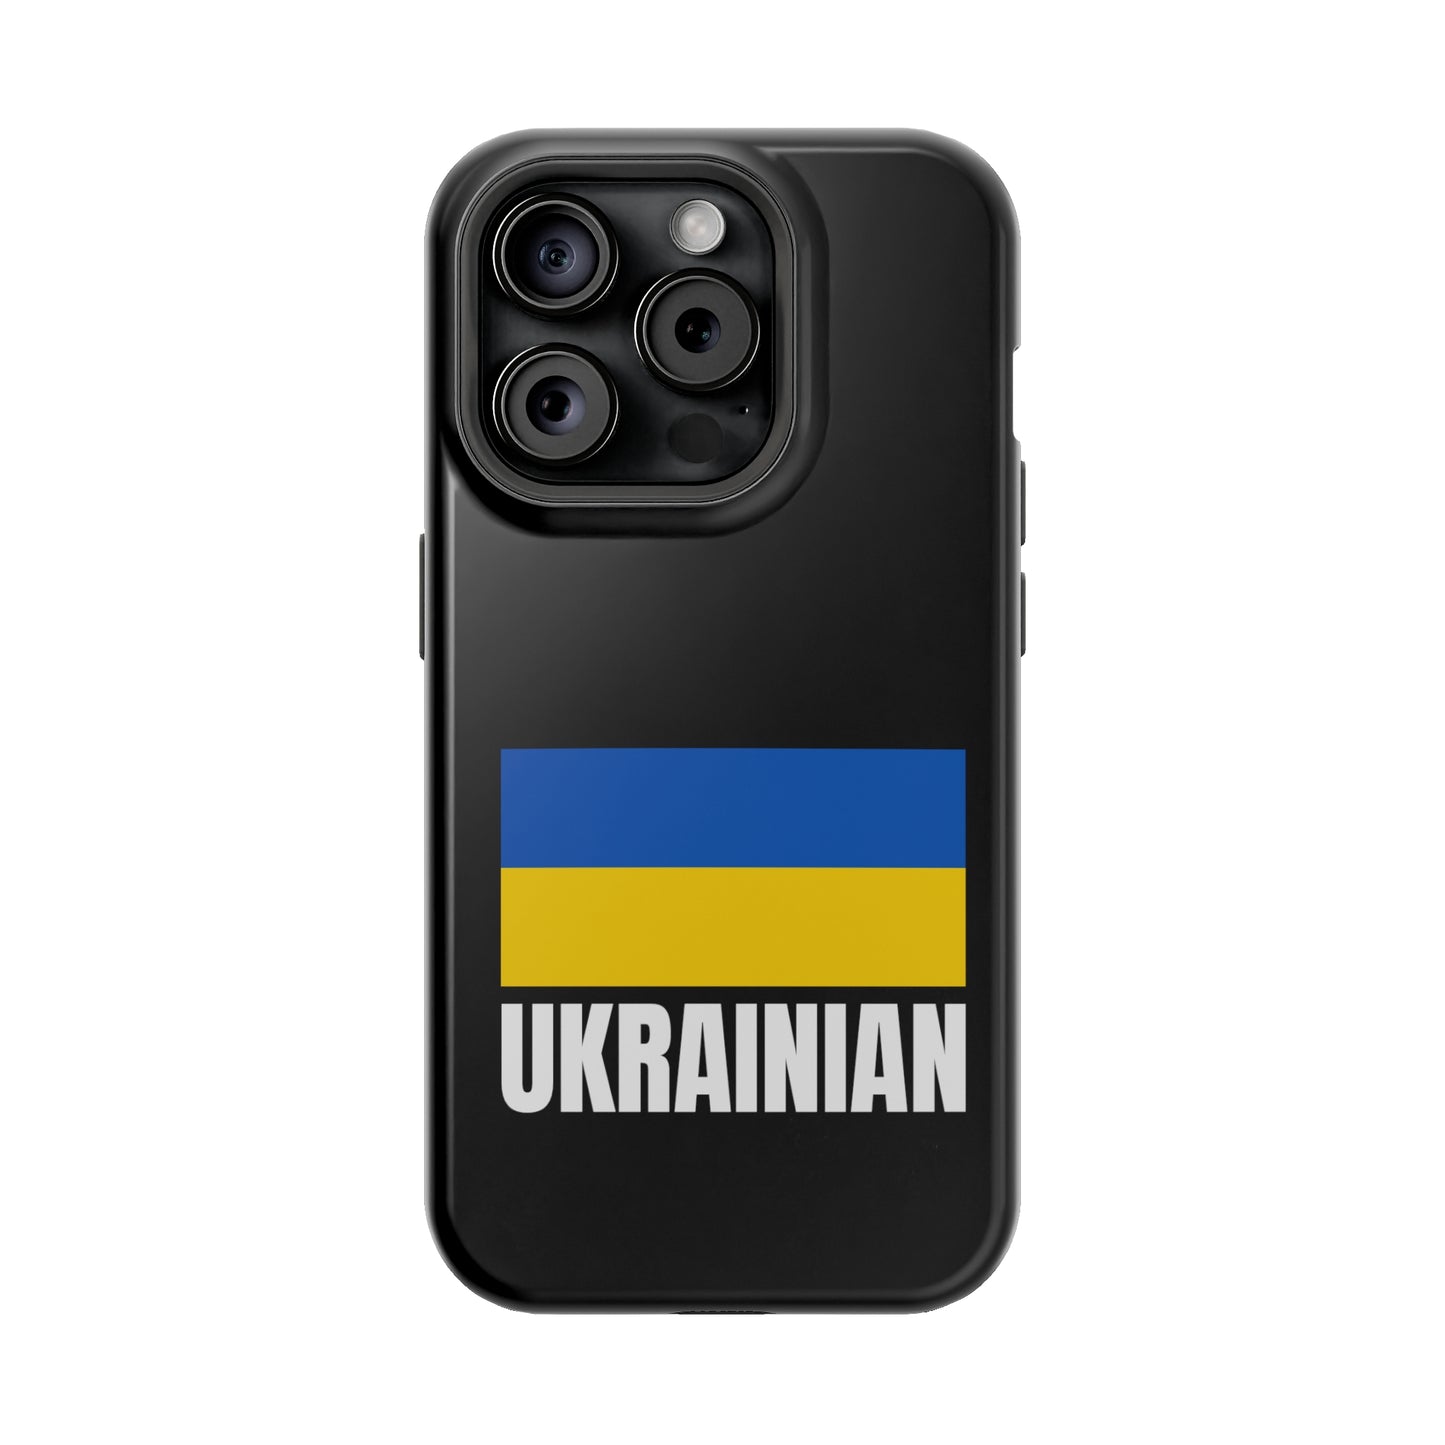 Ukrainian Plain MagSafe Tough Cases